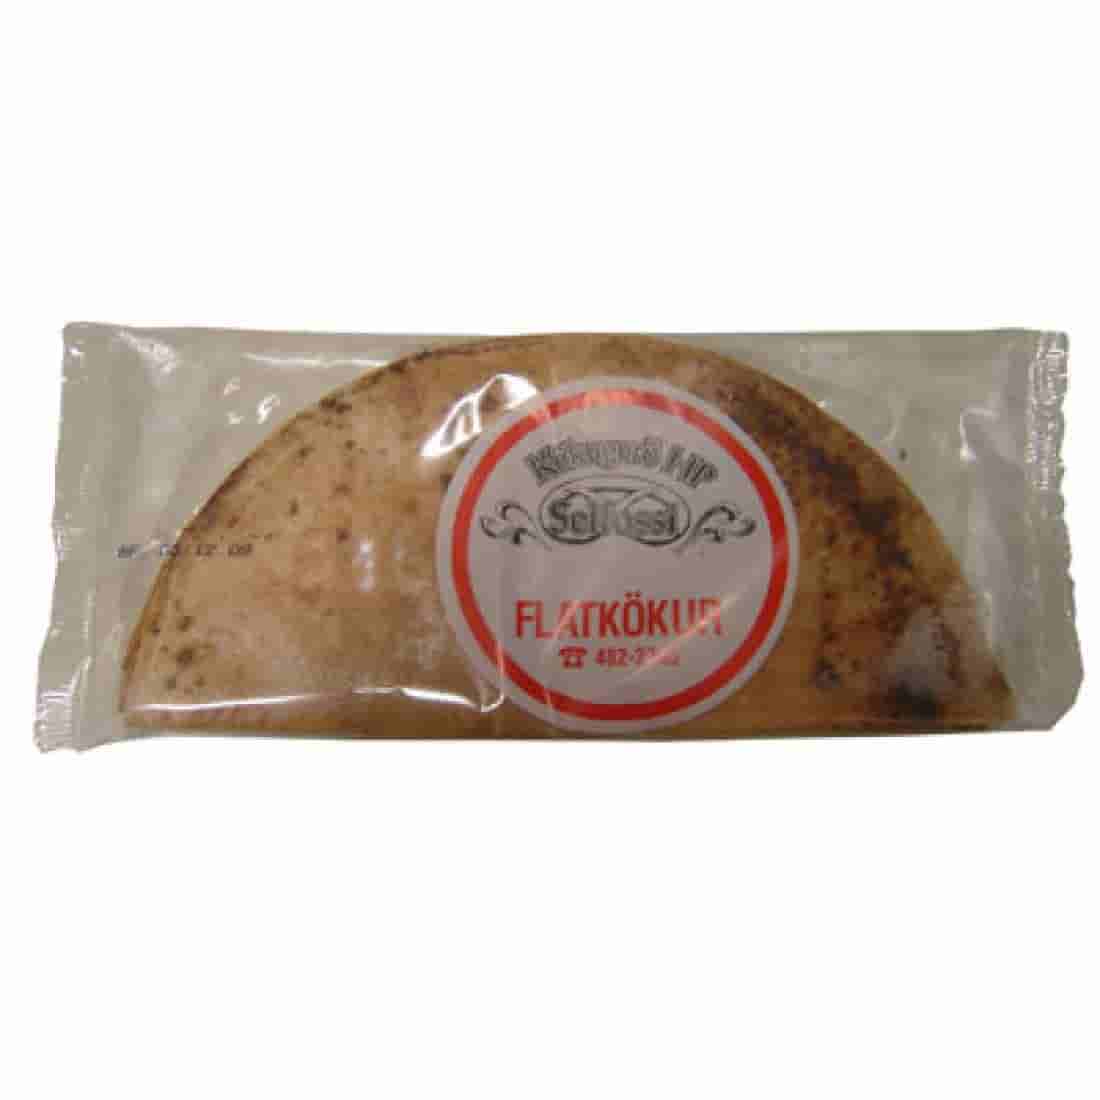 Flatkökur / Flat Bread (180 gr.) - nammi.is